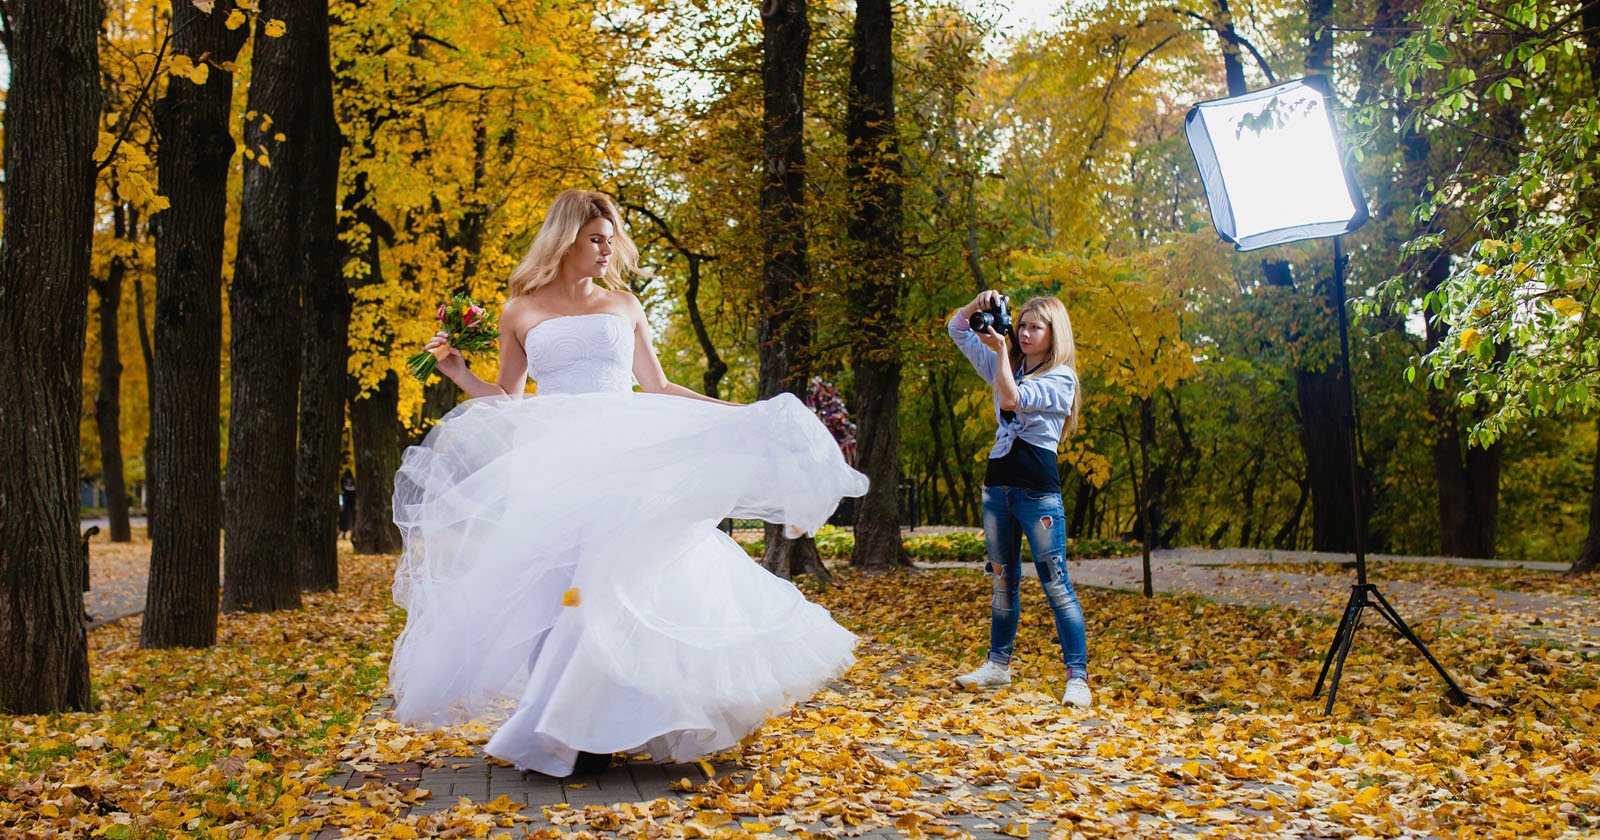  photographer cursed out refusing send wedding photos 